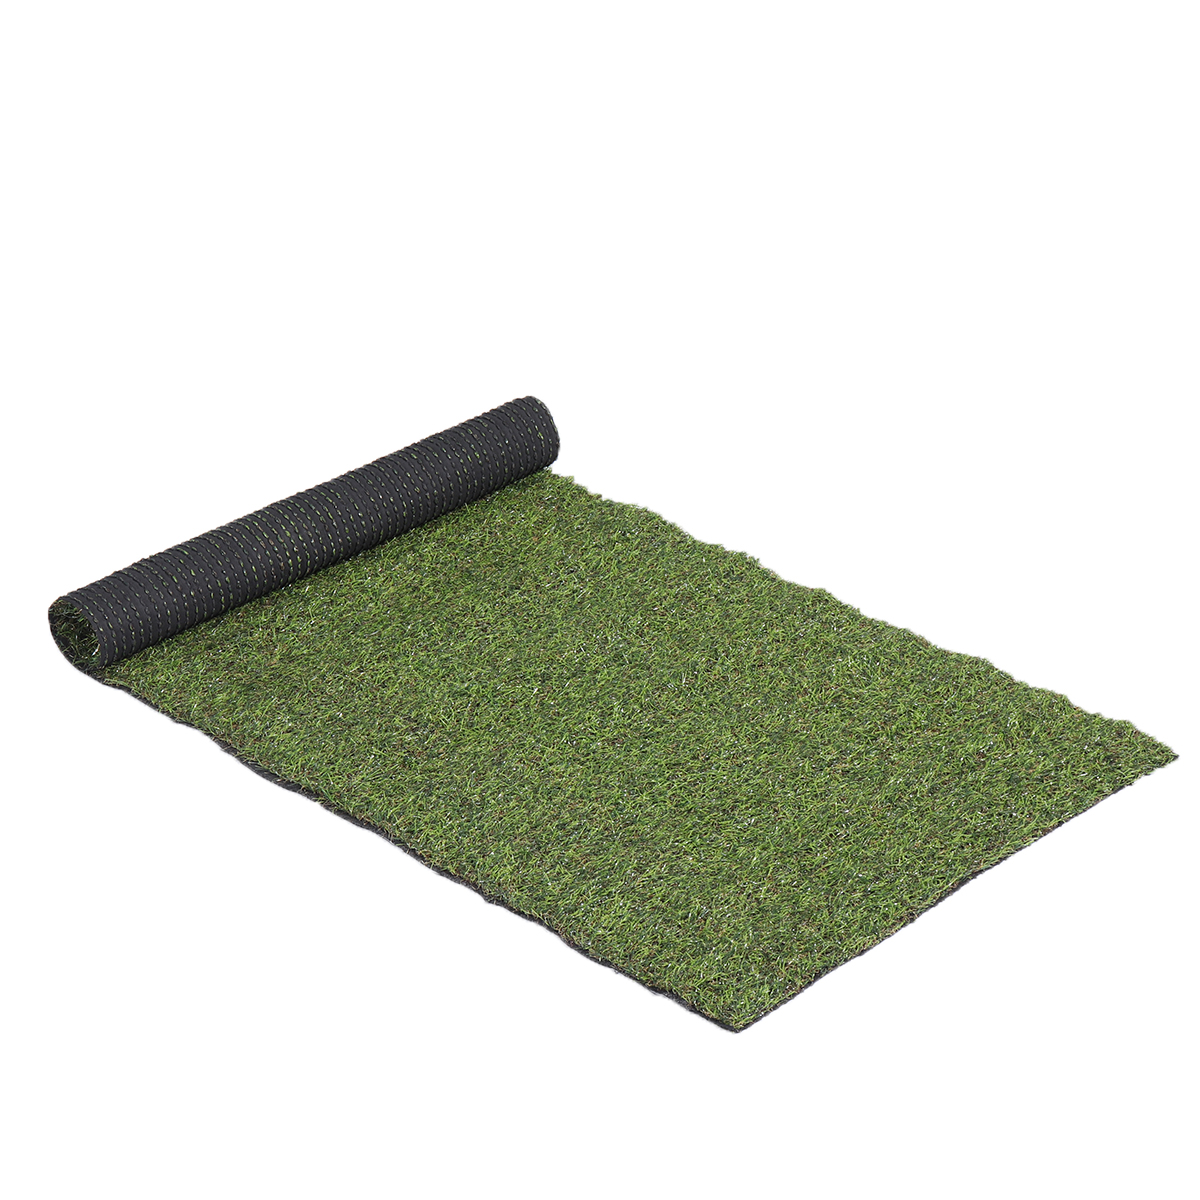 Artificial-Grass-Lawn-Turf-Synthetic-Plants-Lawn-Garden-Flooring-Decor-1702500-5